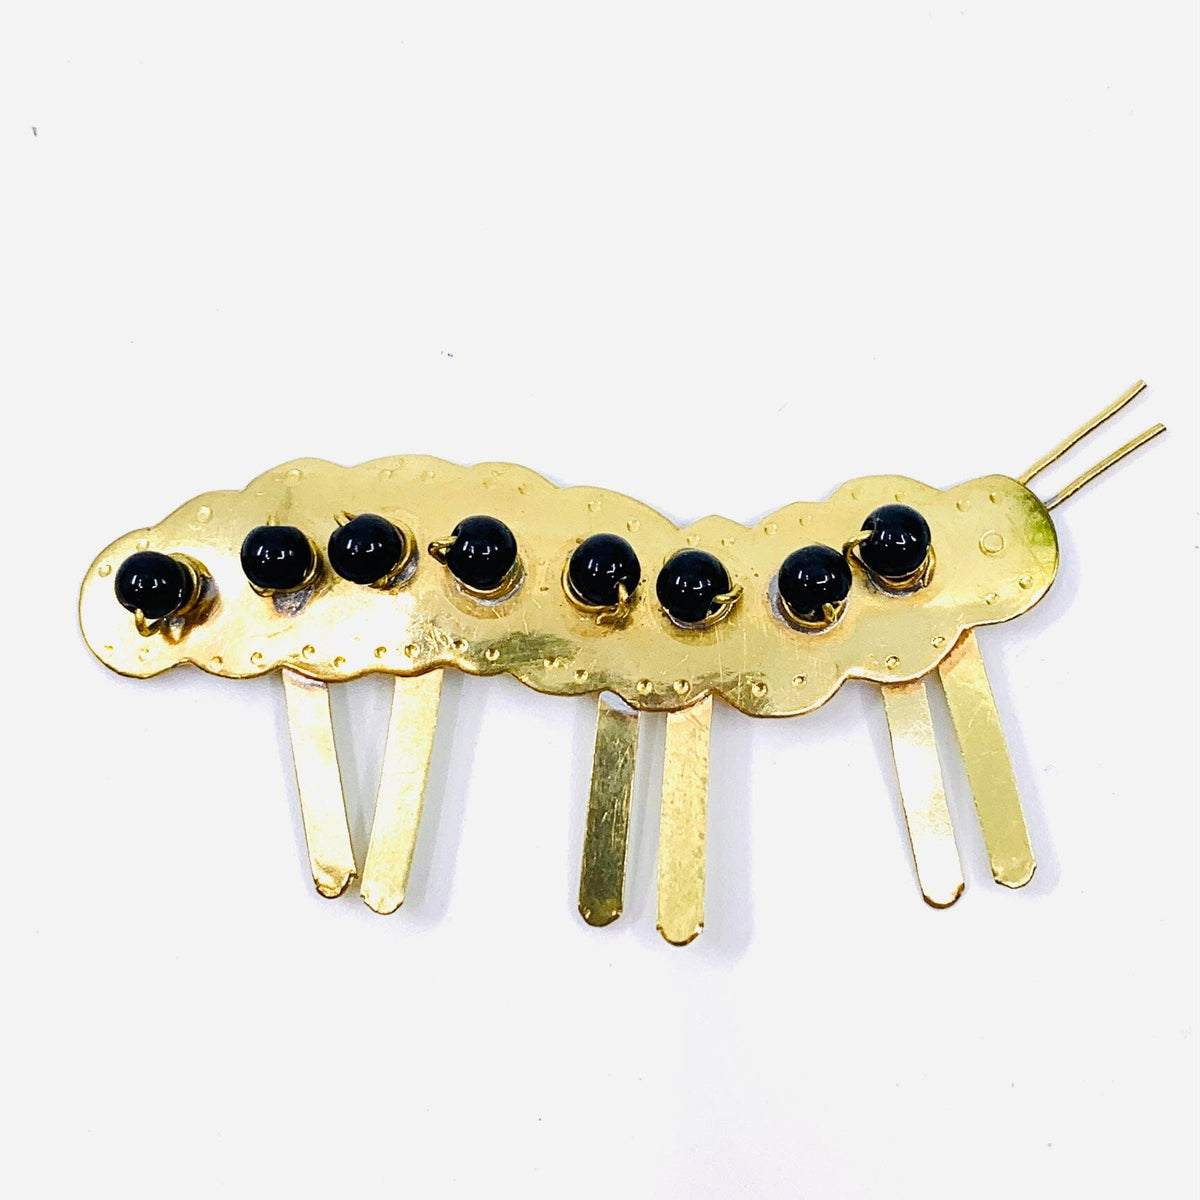 Stem Charms 14, Wiggly Caterpillar